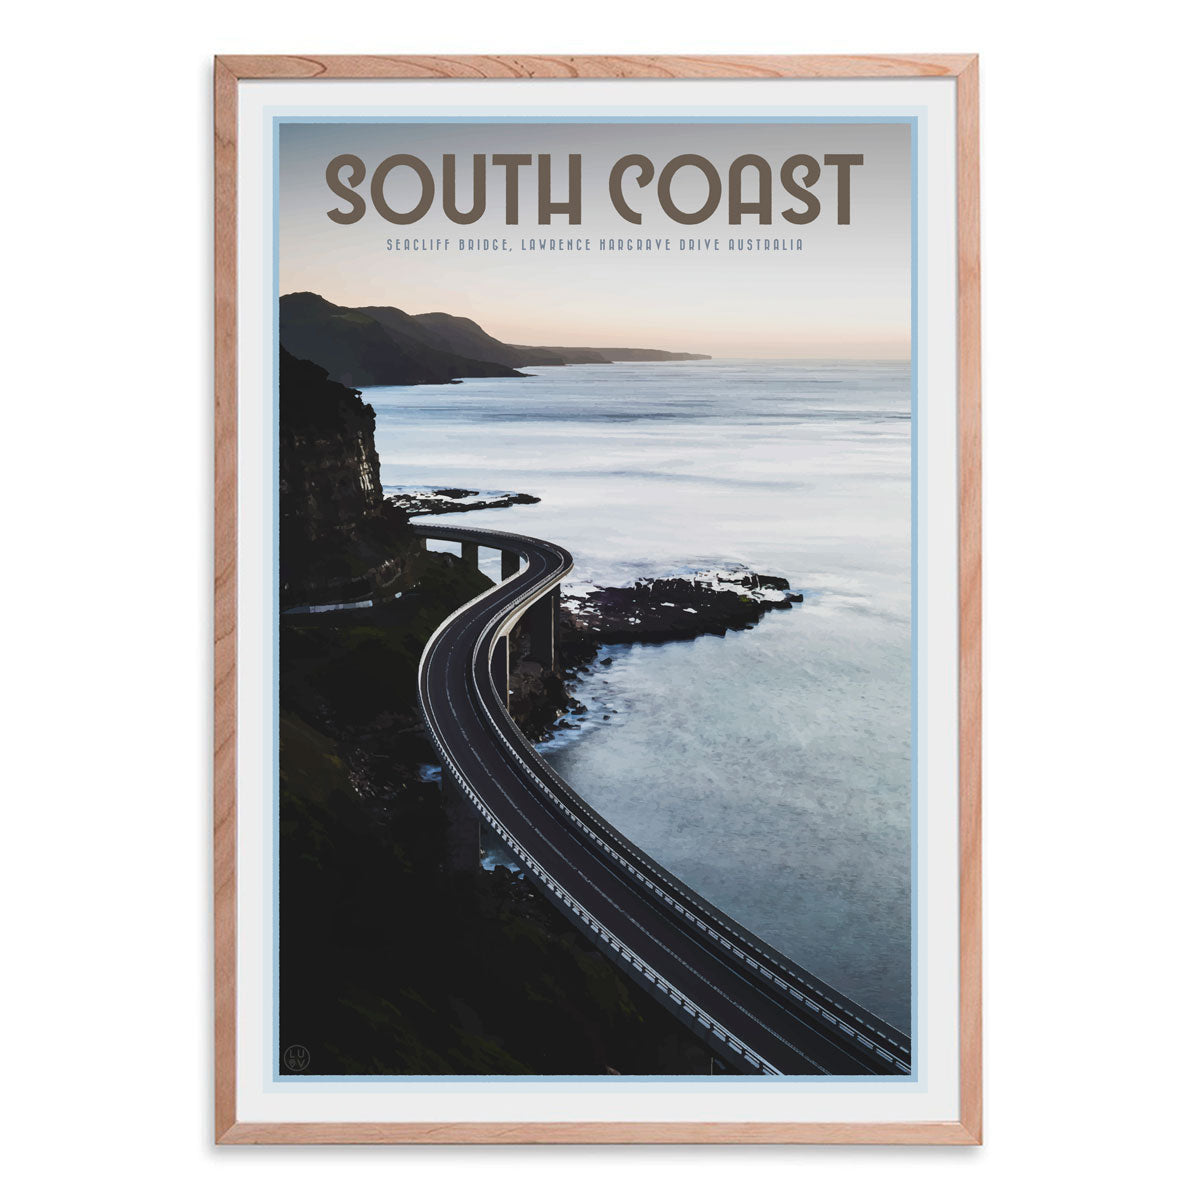 South coast seacliff bridge oak framed art print by places we luv